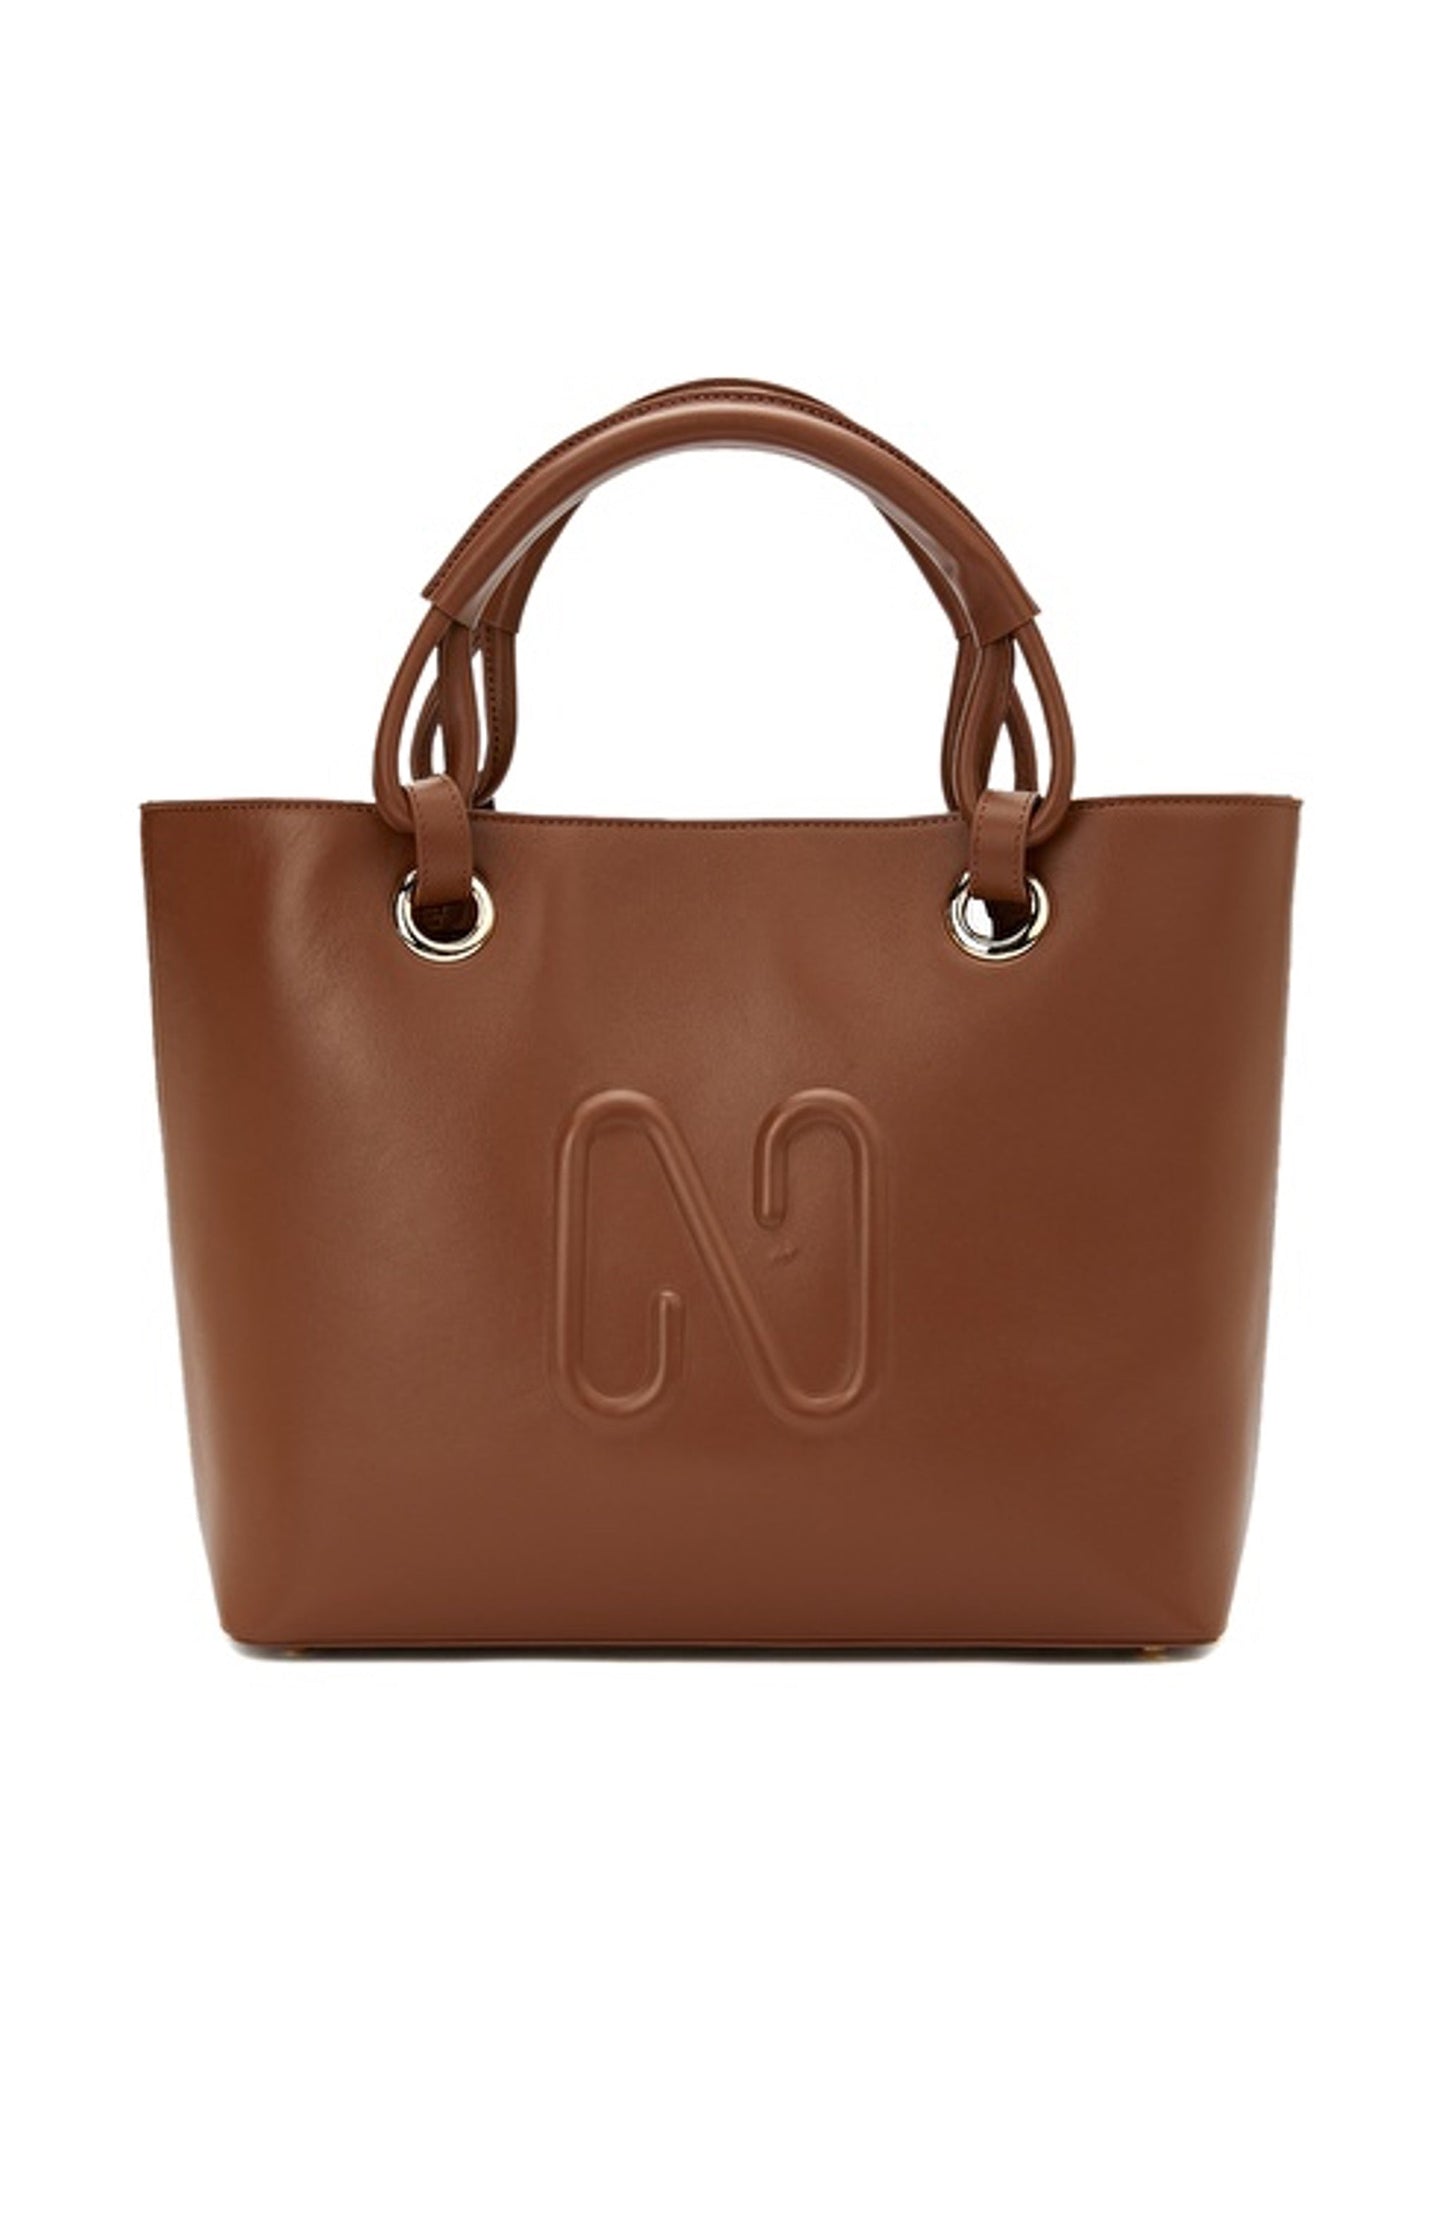 Woman Handbag 100% Leather Bag Brown Color Handle and Shoulder Strap